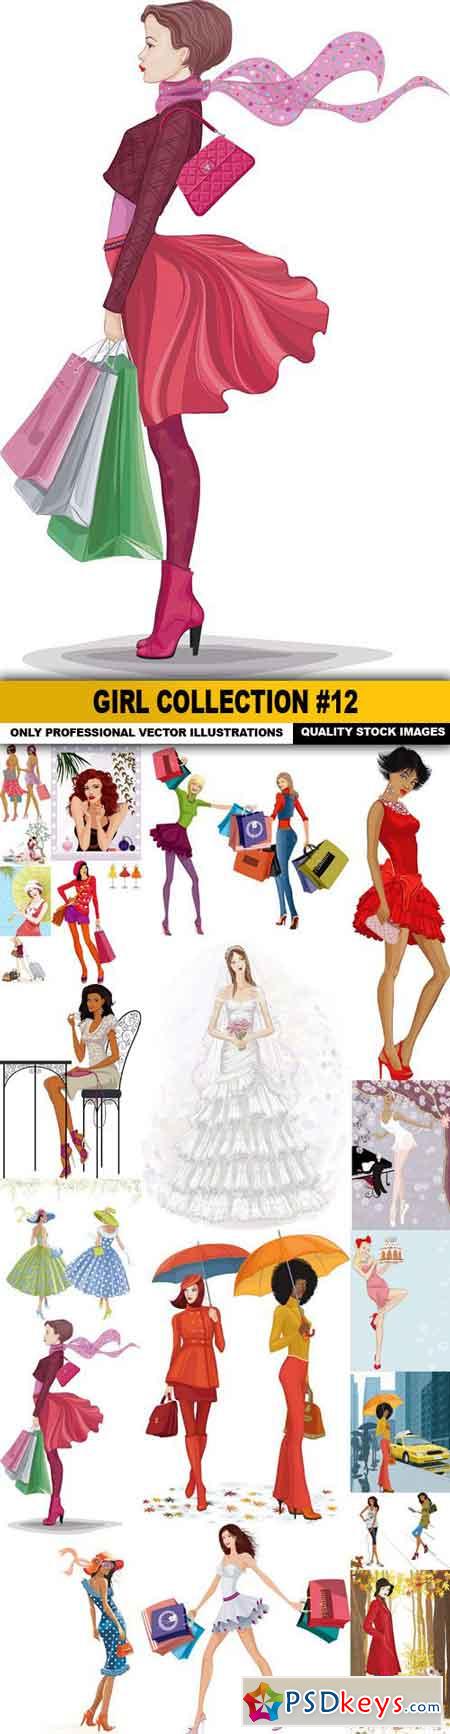 Girl Collection #12 - 20 Vector